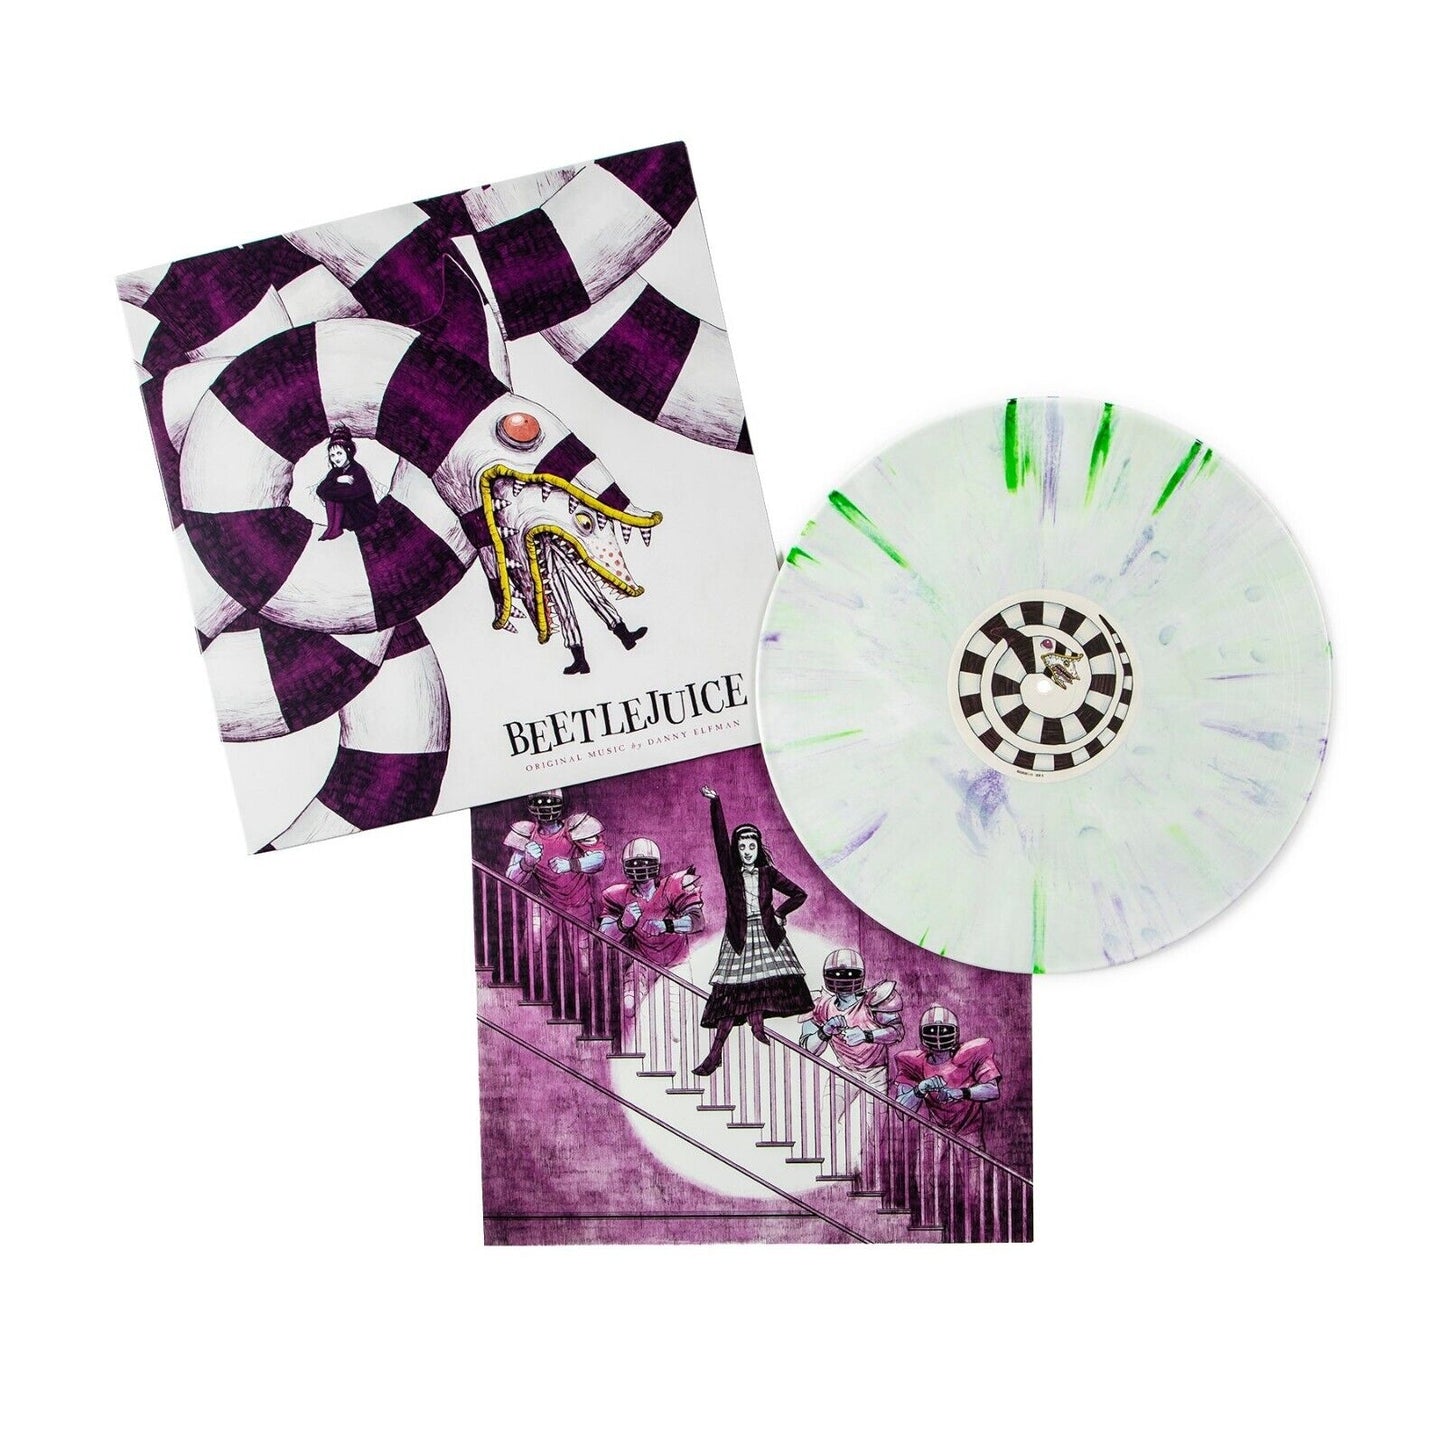 Danny Elfman - Beetlejuice Soundtrack - “Beetlejuice Swirl” Color Vinyl Record